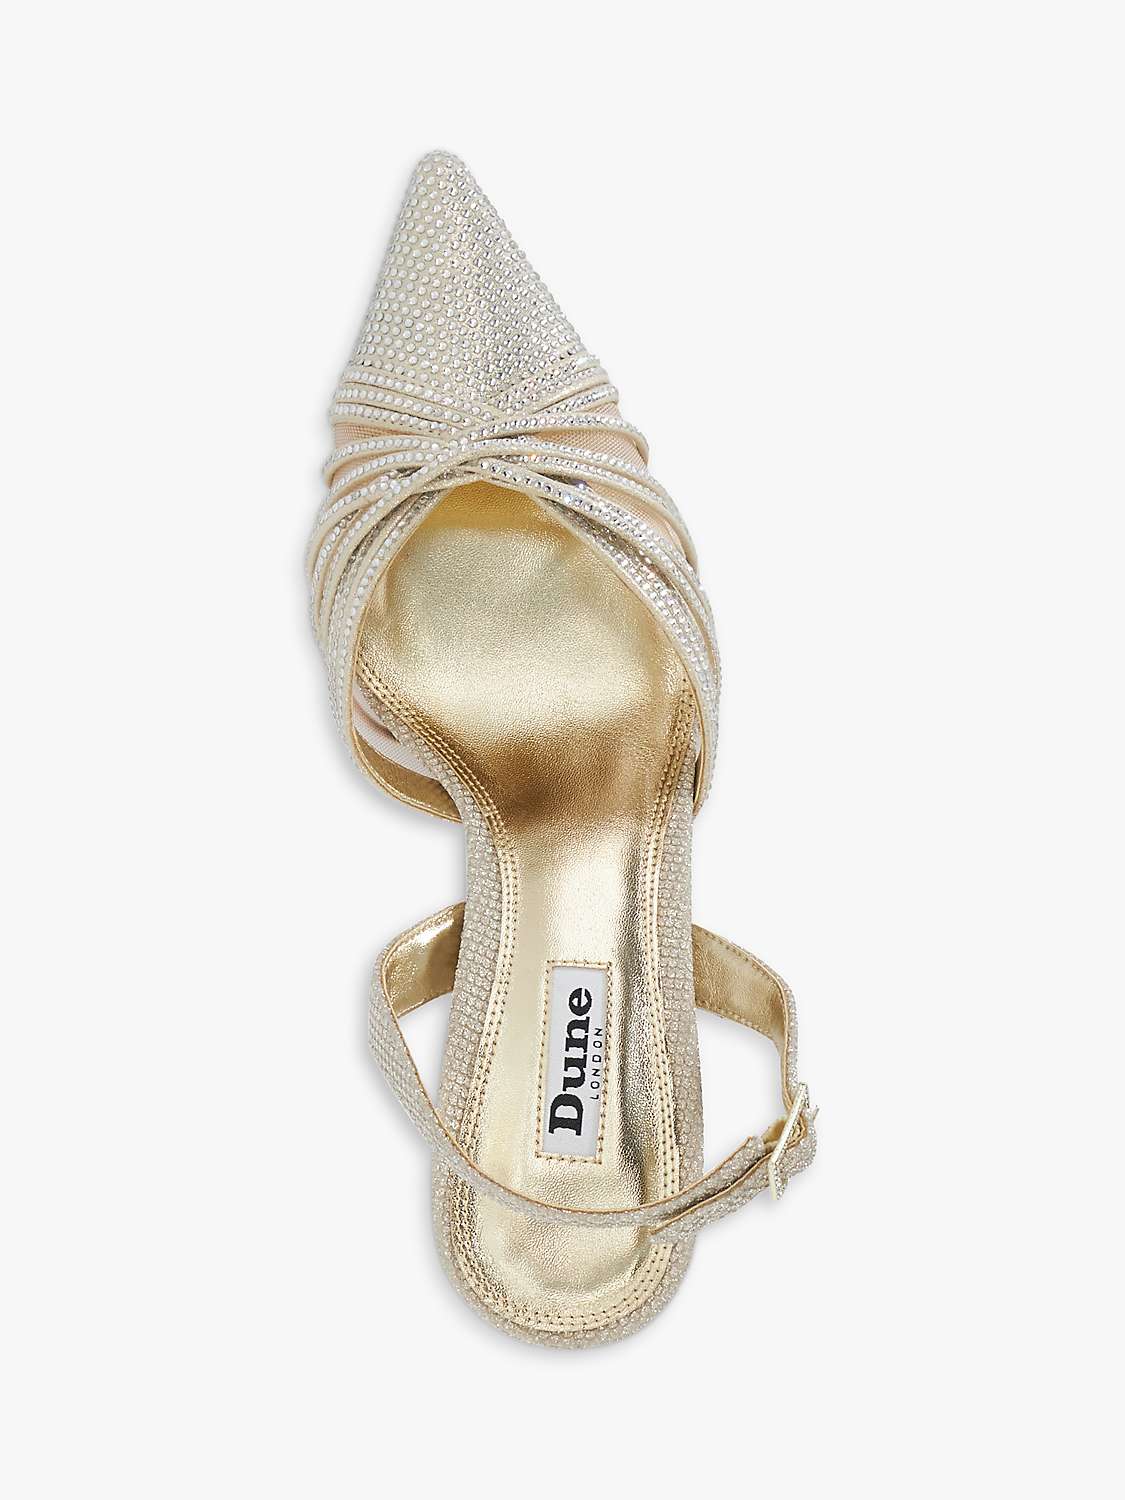 Dune Cloudia Diamante Mesh Slingback Court Shoes, Gold at John Lewis ...